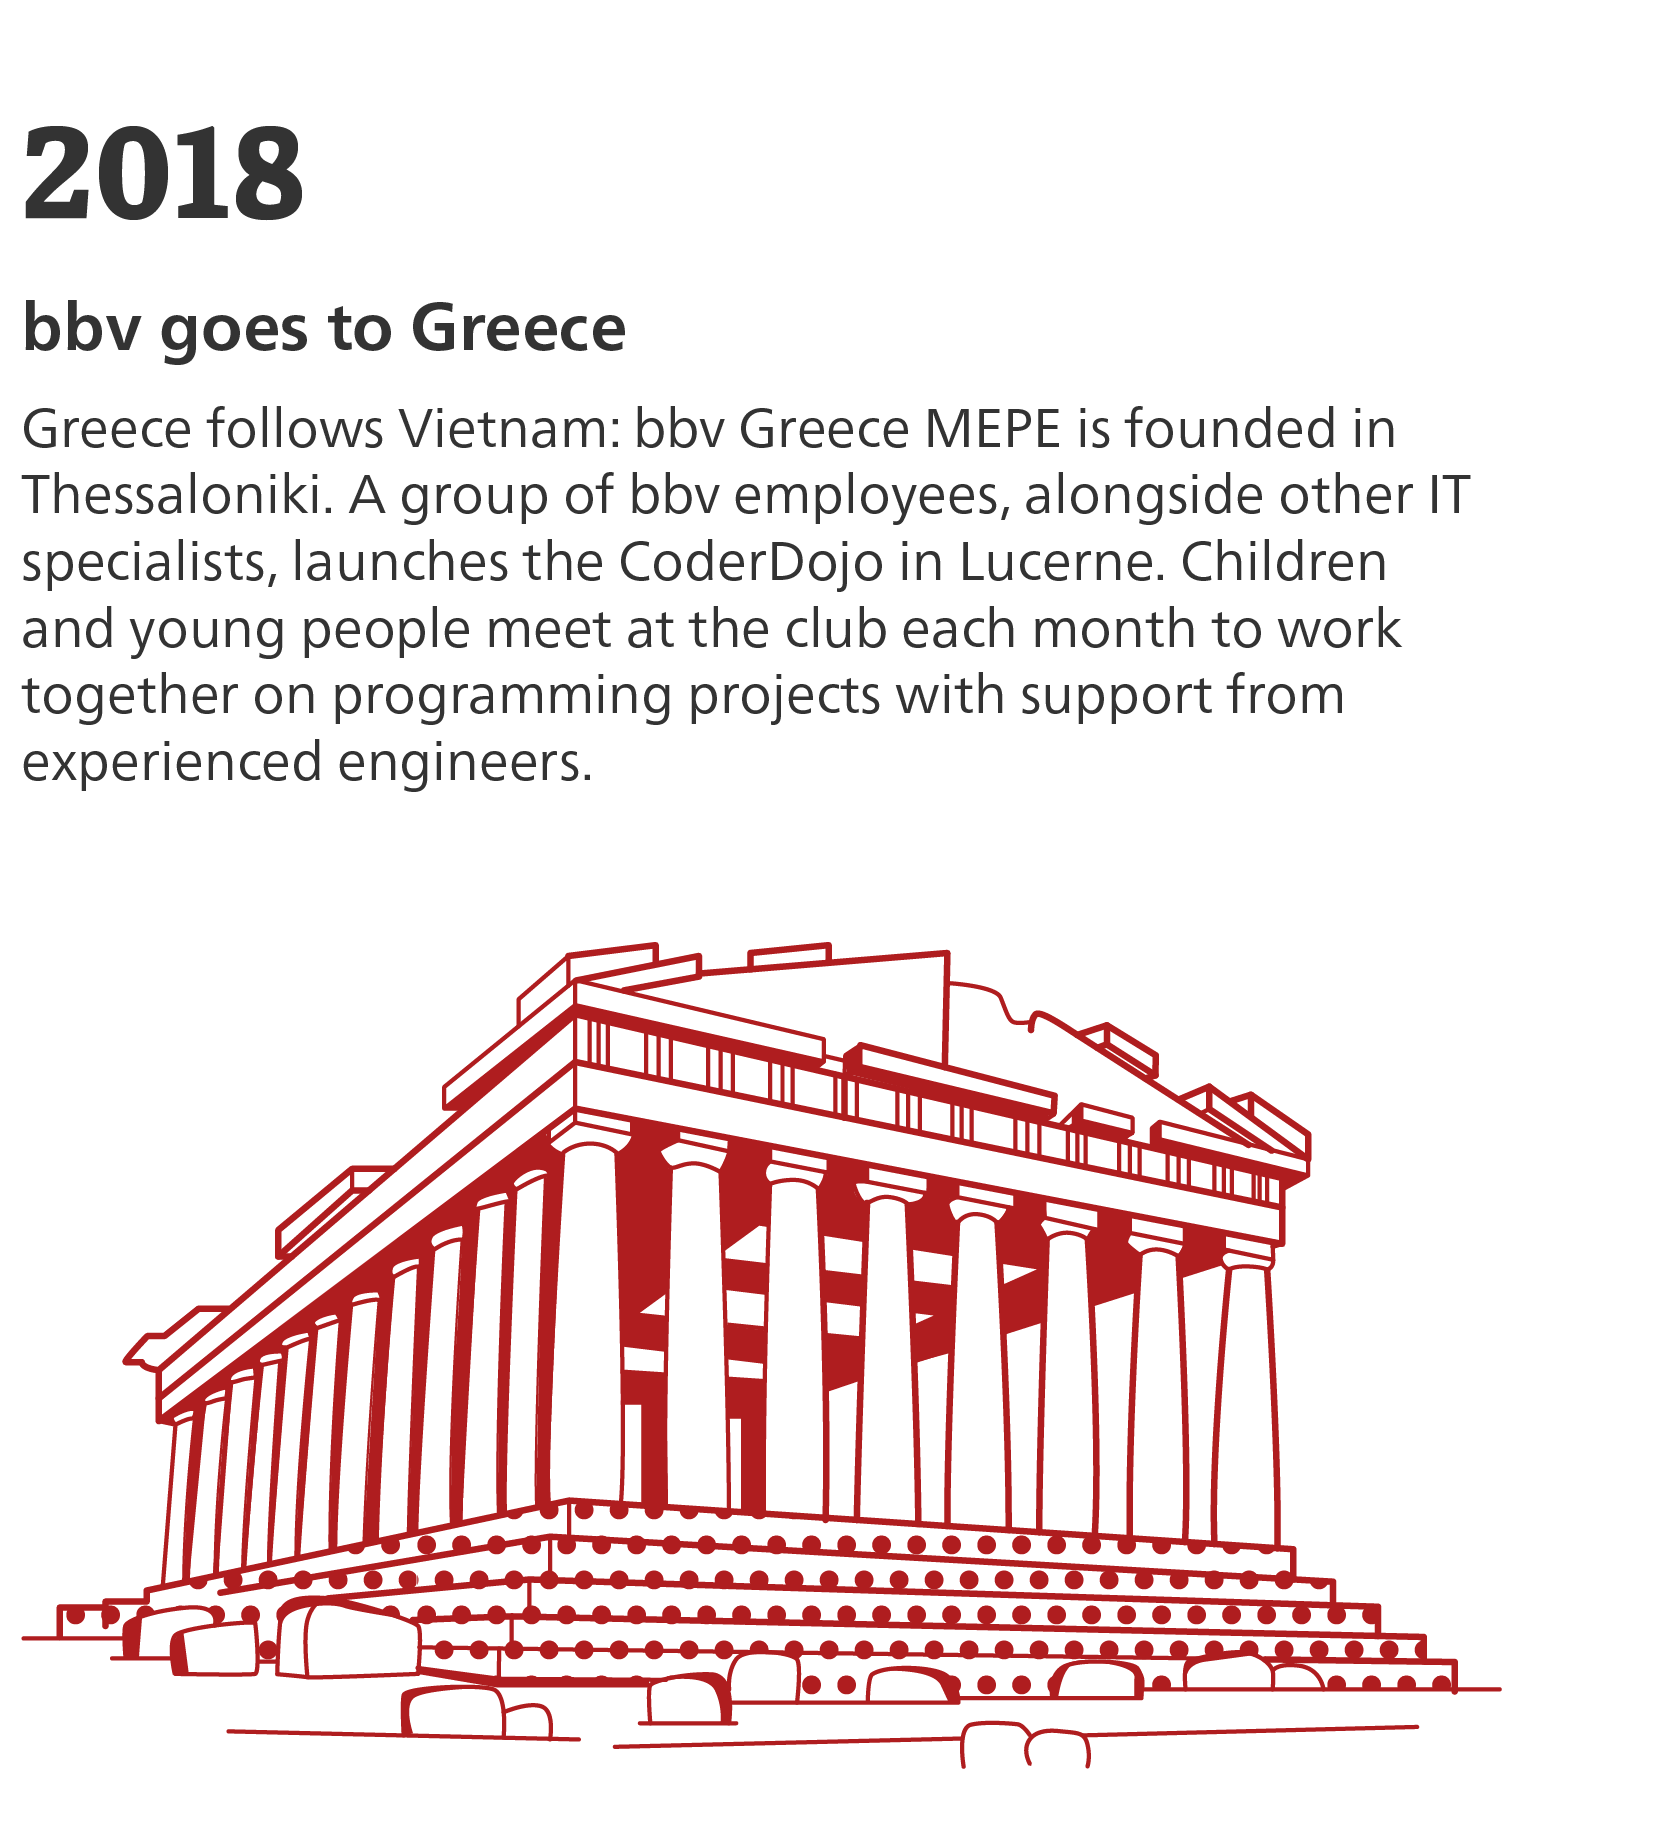 bbv history greece 2018